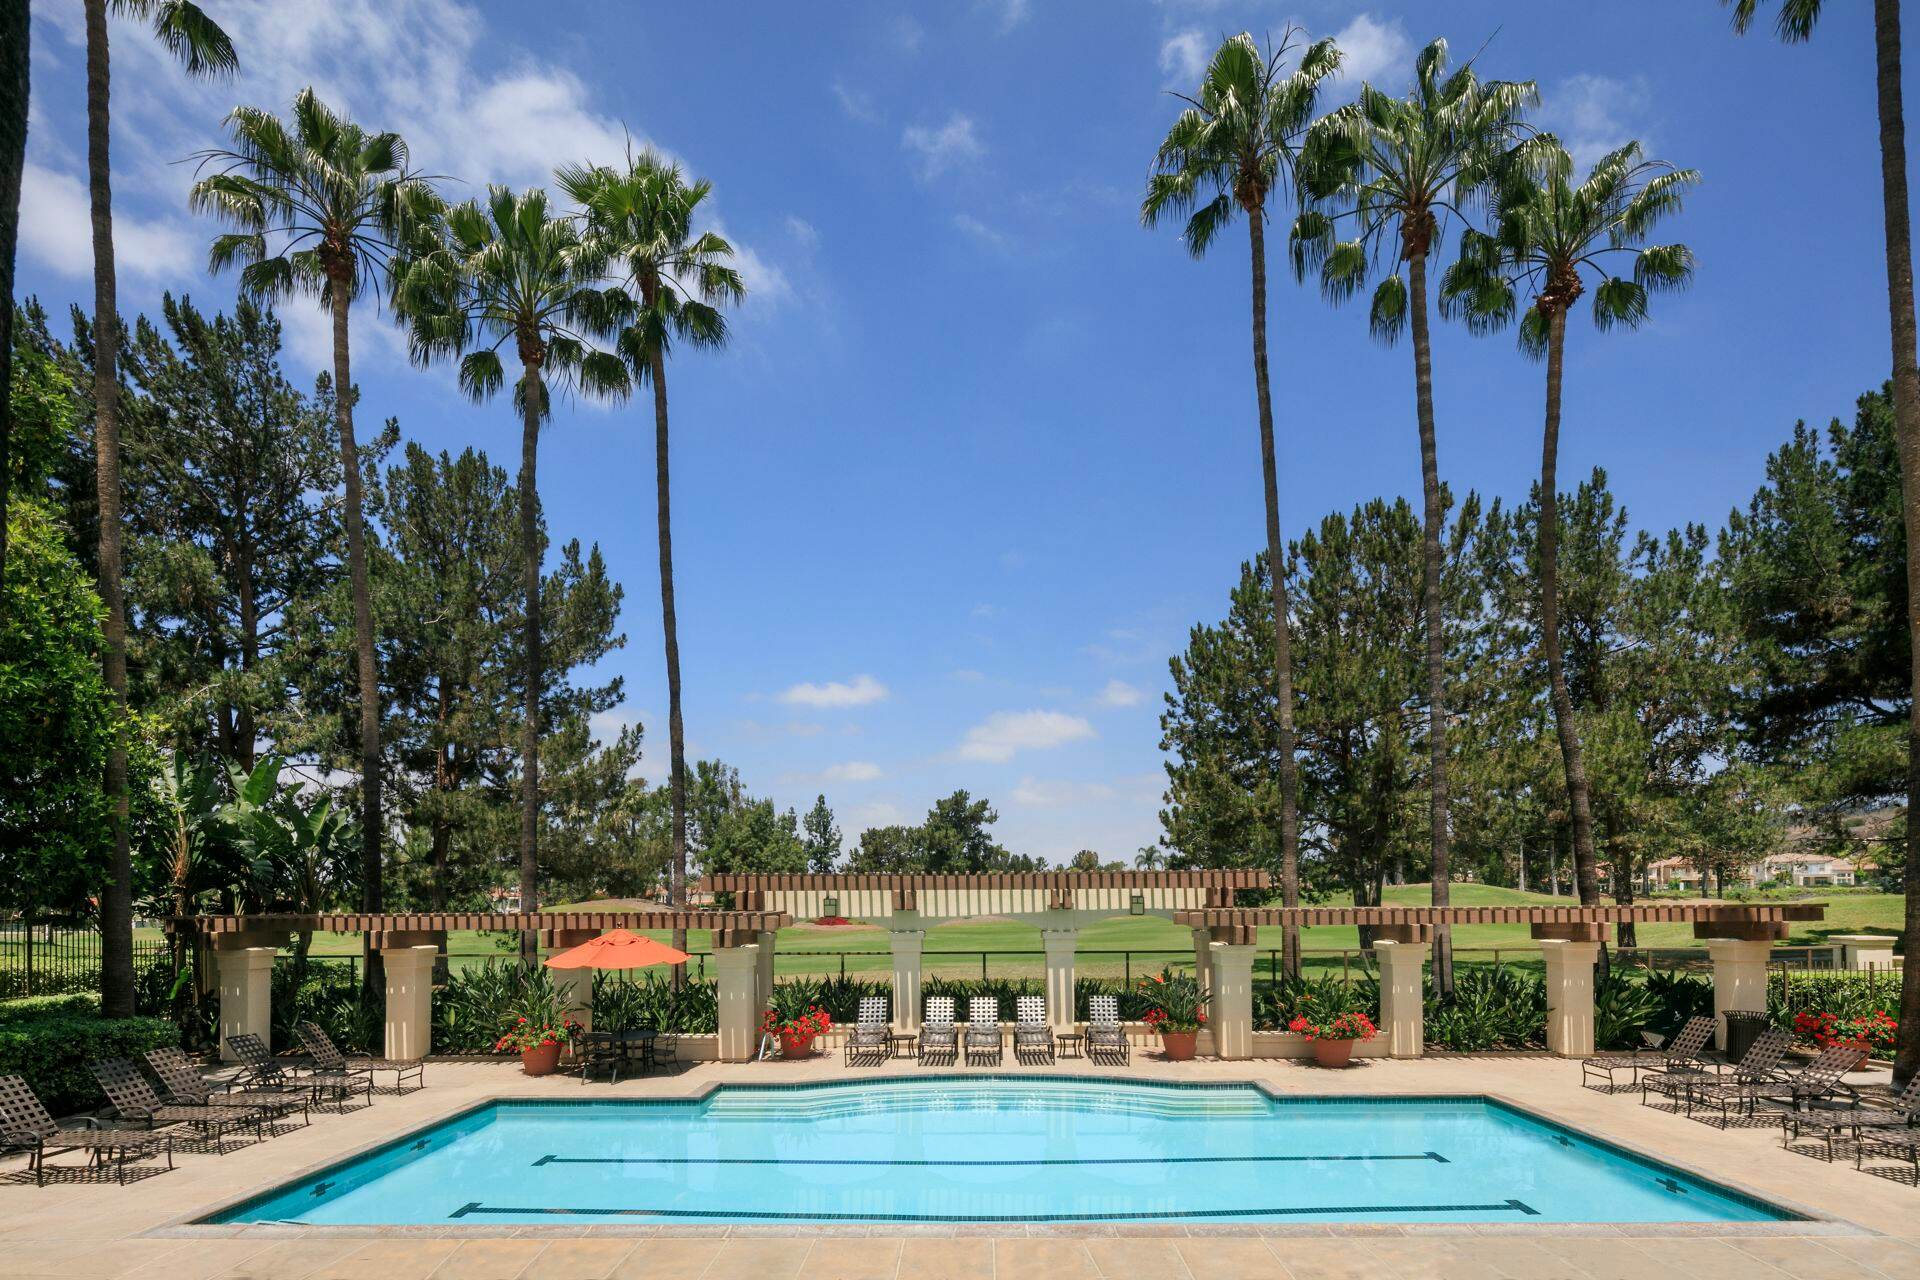 Exterior view of pool at Sierra Vista Apartment Homes in Tustin, CA.